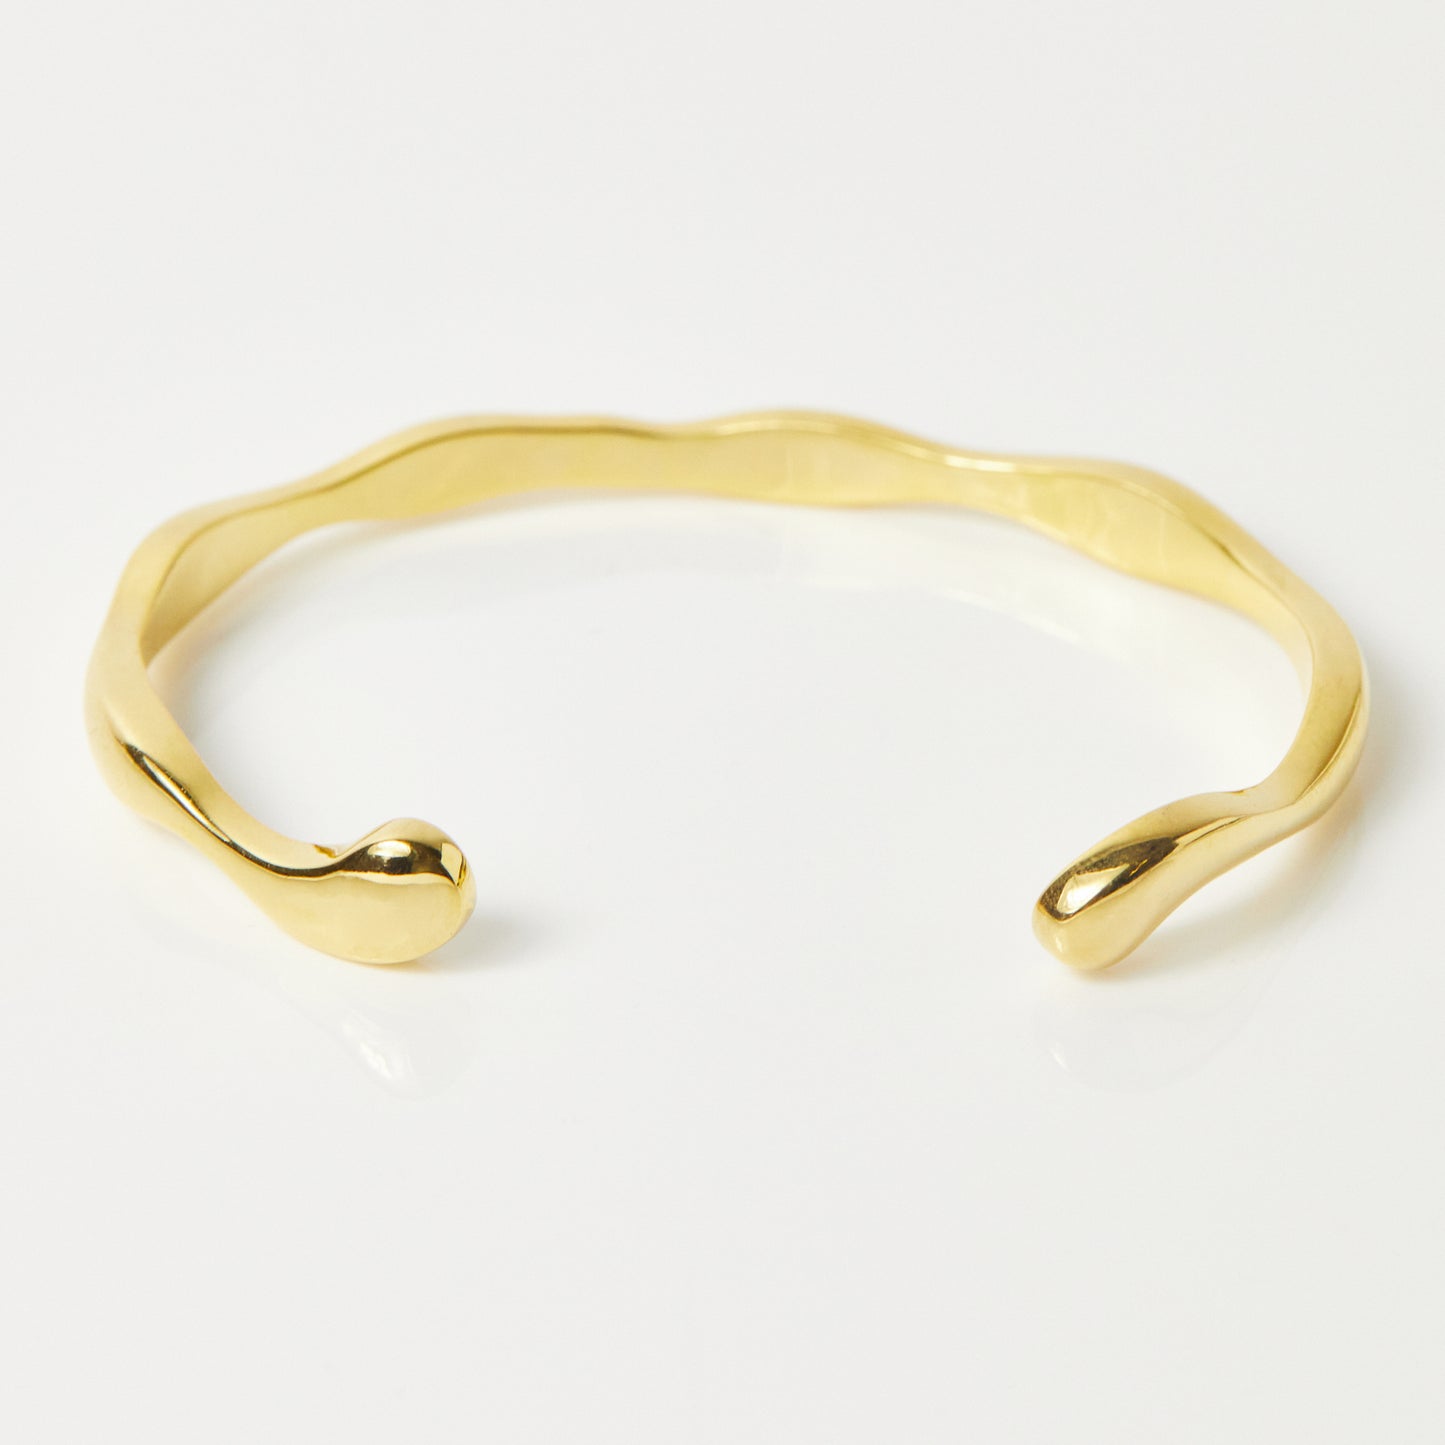 Wavey Cuff Bangle In Gold Plating - Bracelet - Carrie Elizabeth